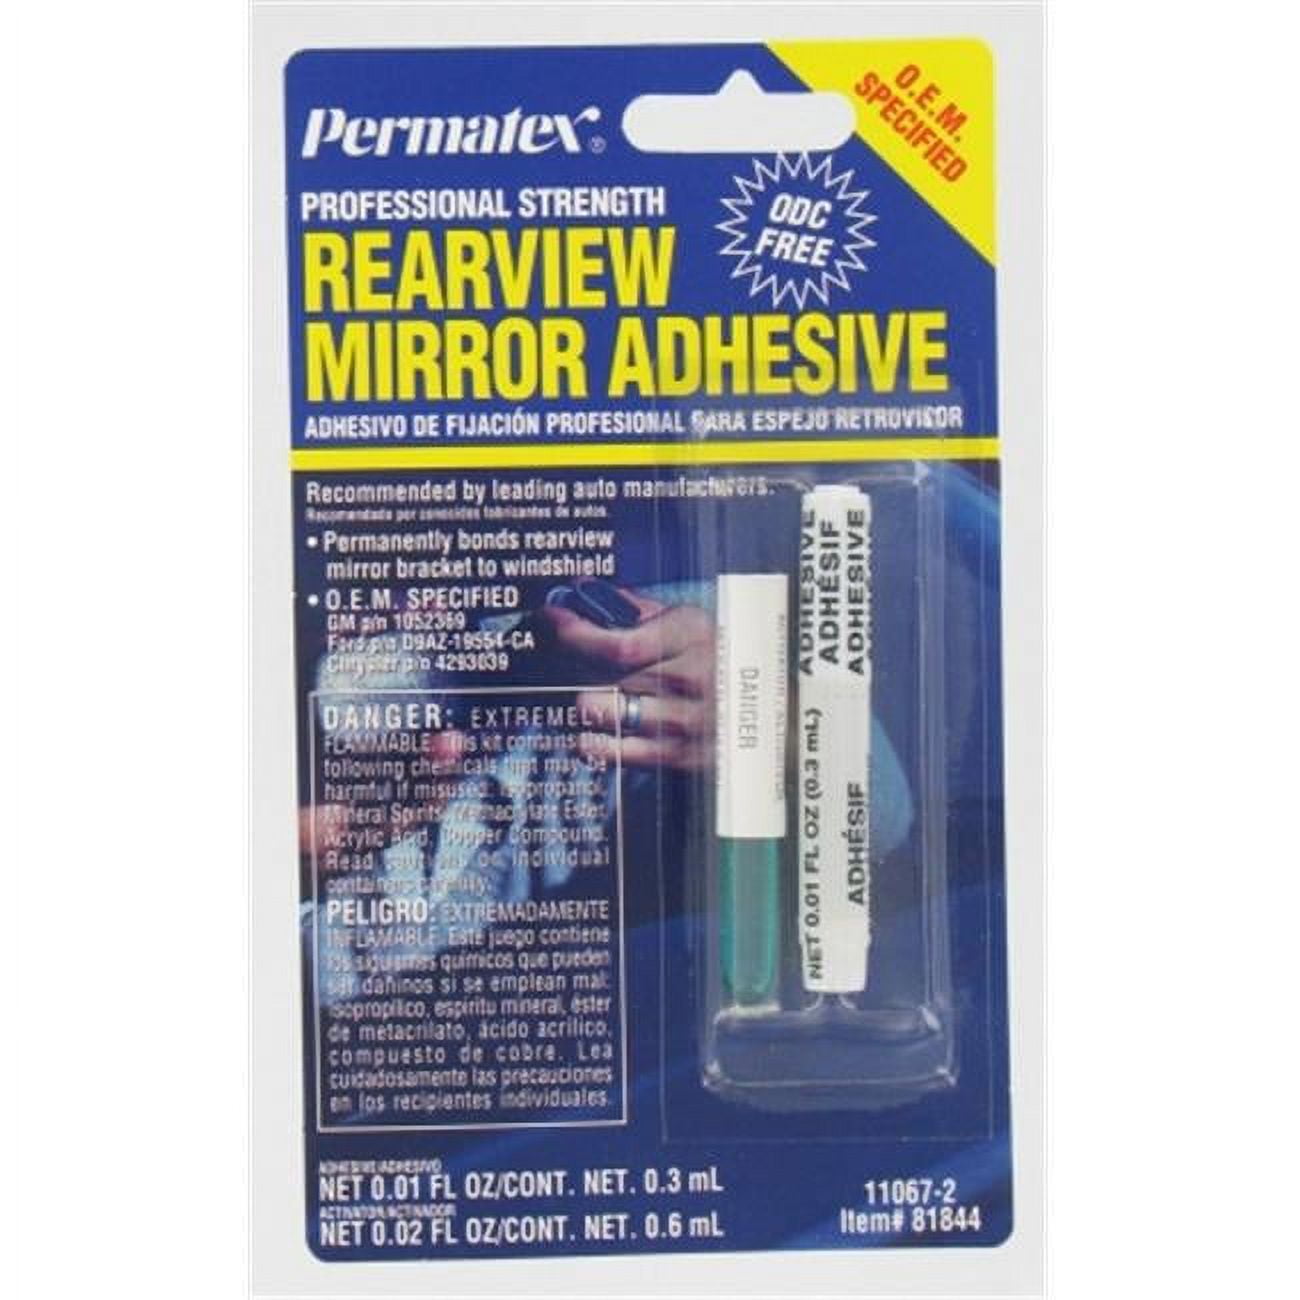 Rearview Mirror Adhesive Kit by Permatex at Fleet Farm